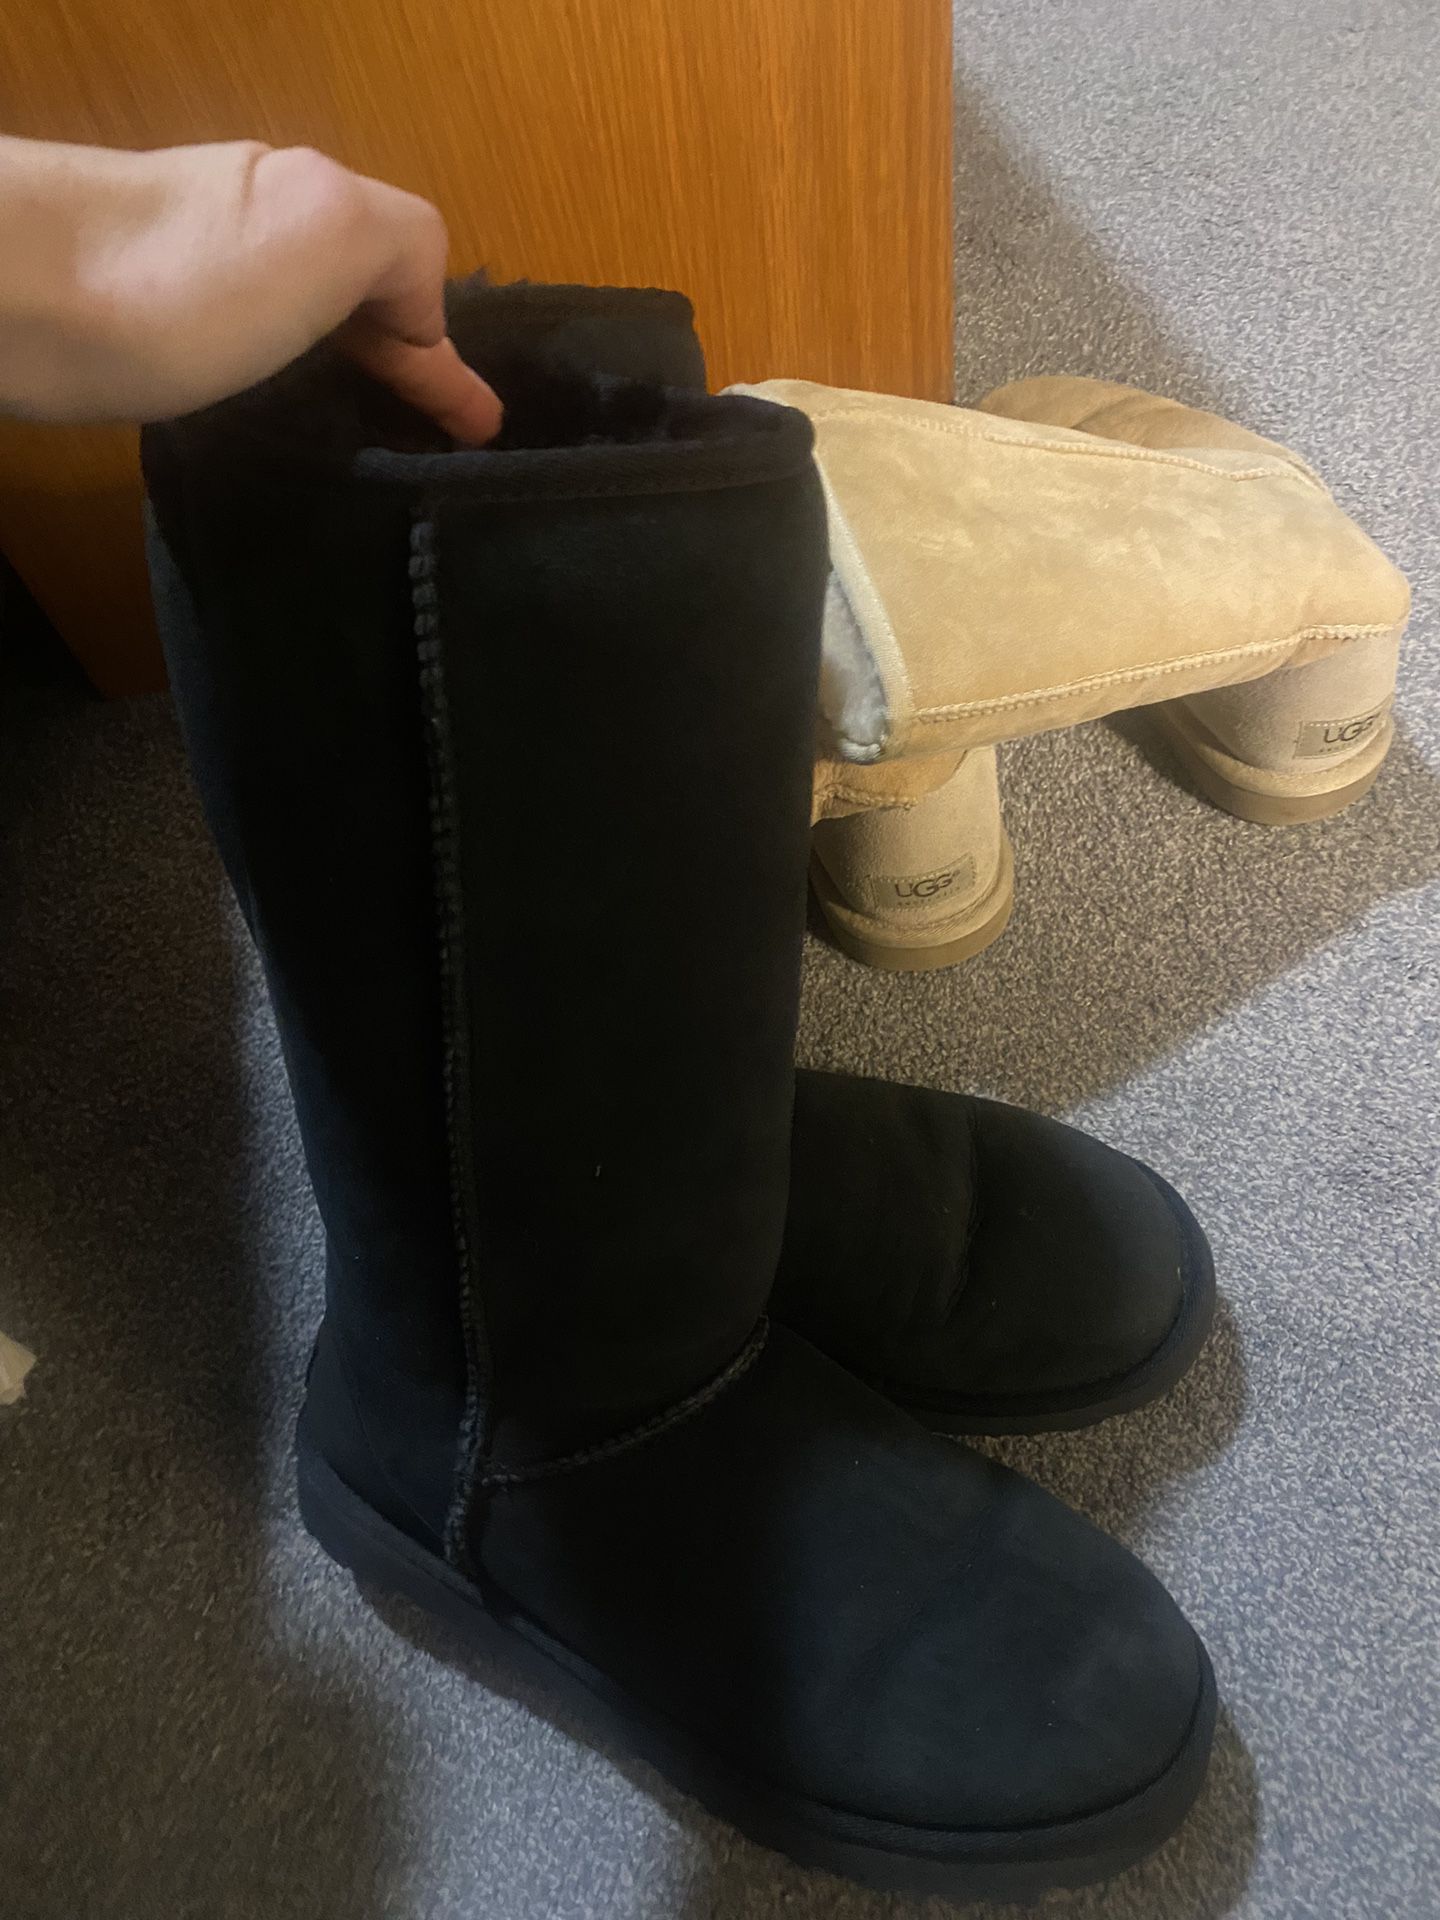 Black Ugg boots, Size 9 